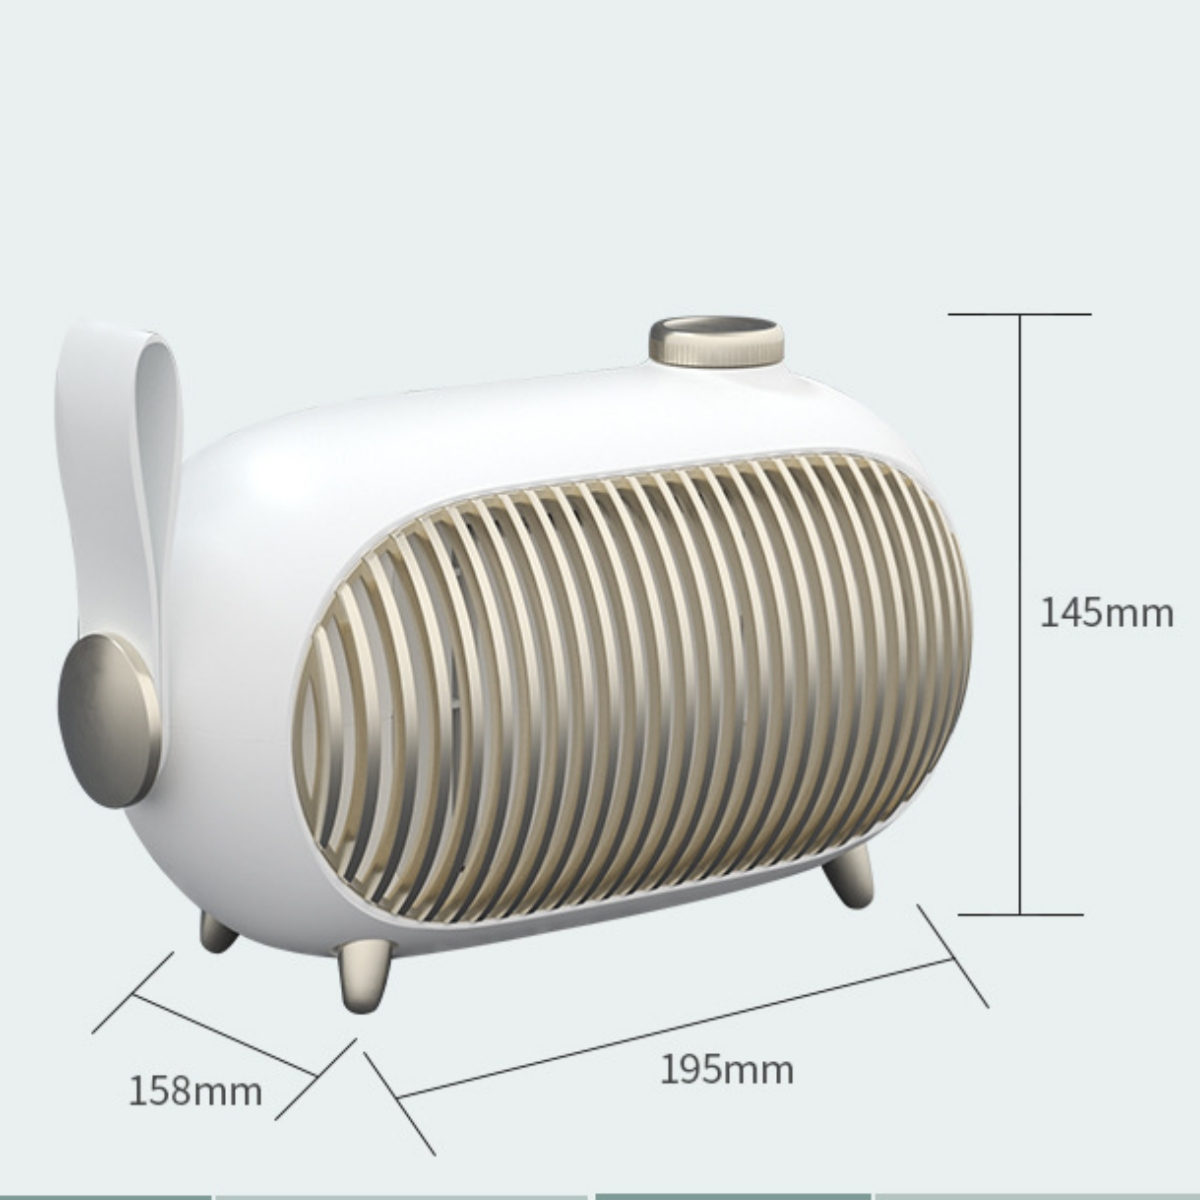 Kleingeräte Becher Grün Büro Elektrischer Mini Wasserbecher Kosmetik Kleiner SHAOKE kochender Smart Mug 110v